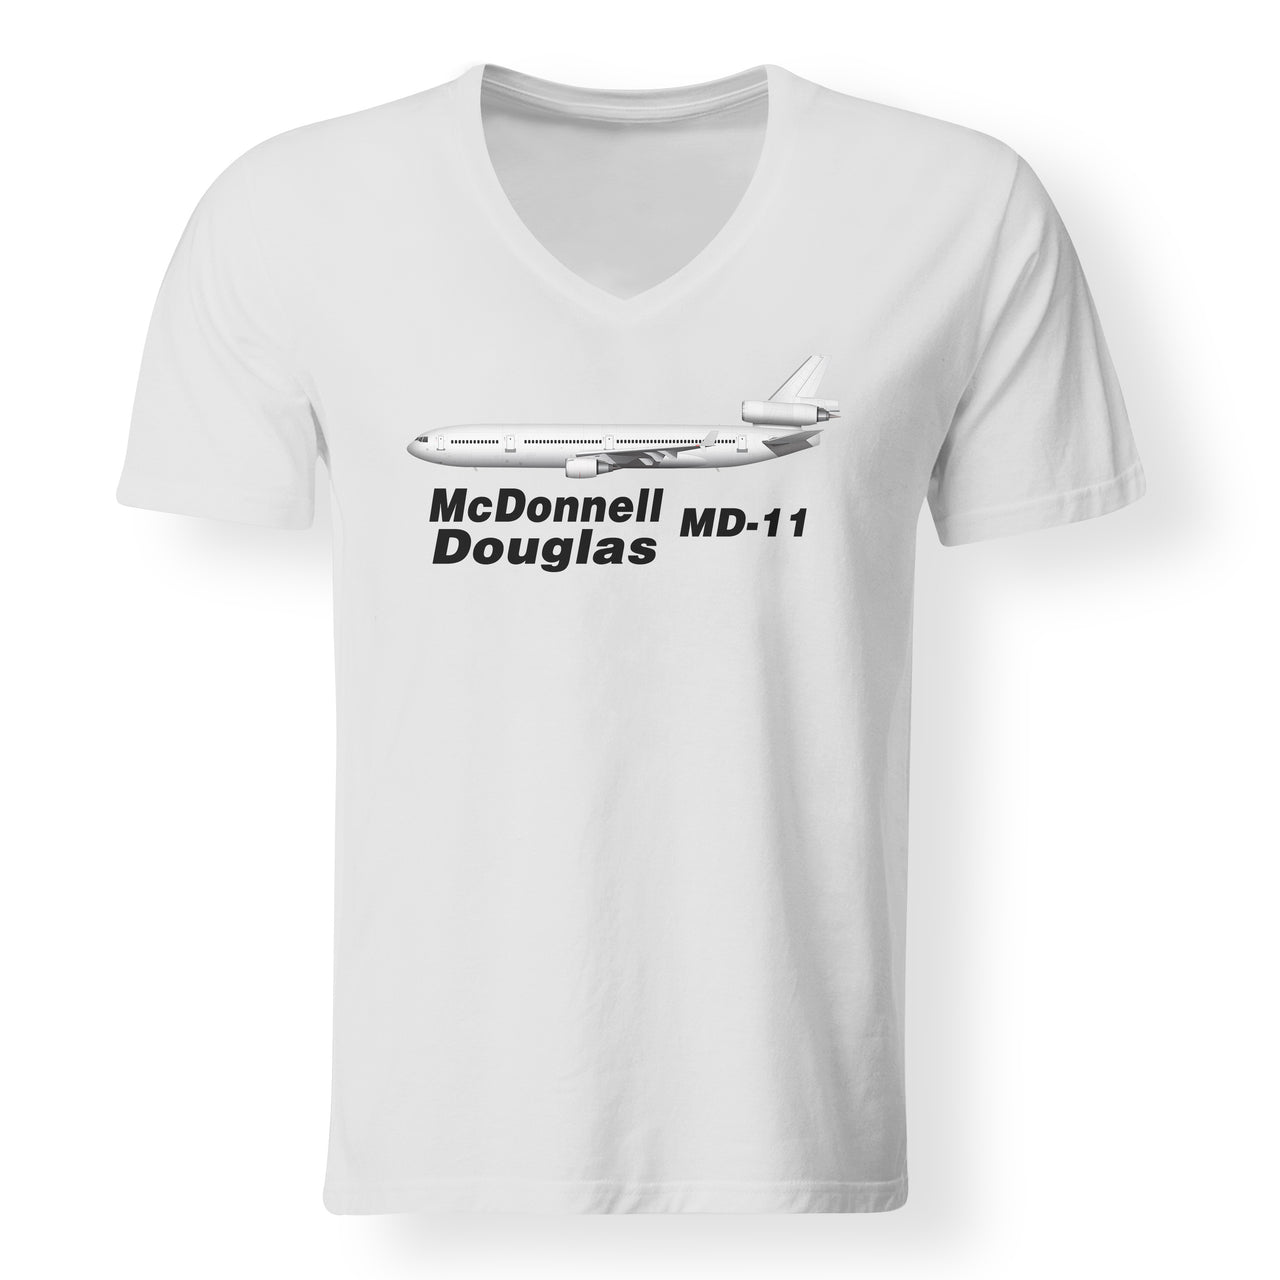 The McDonnell Douglas MD-11 Designed V-Neck T-Shirts